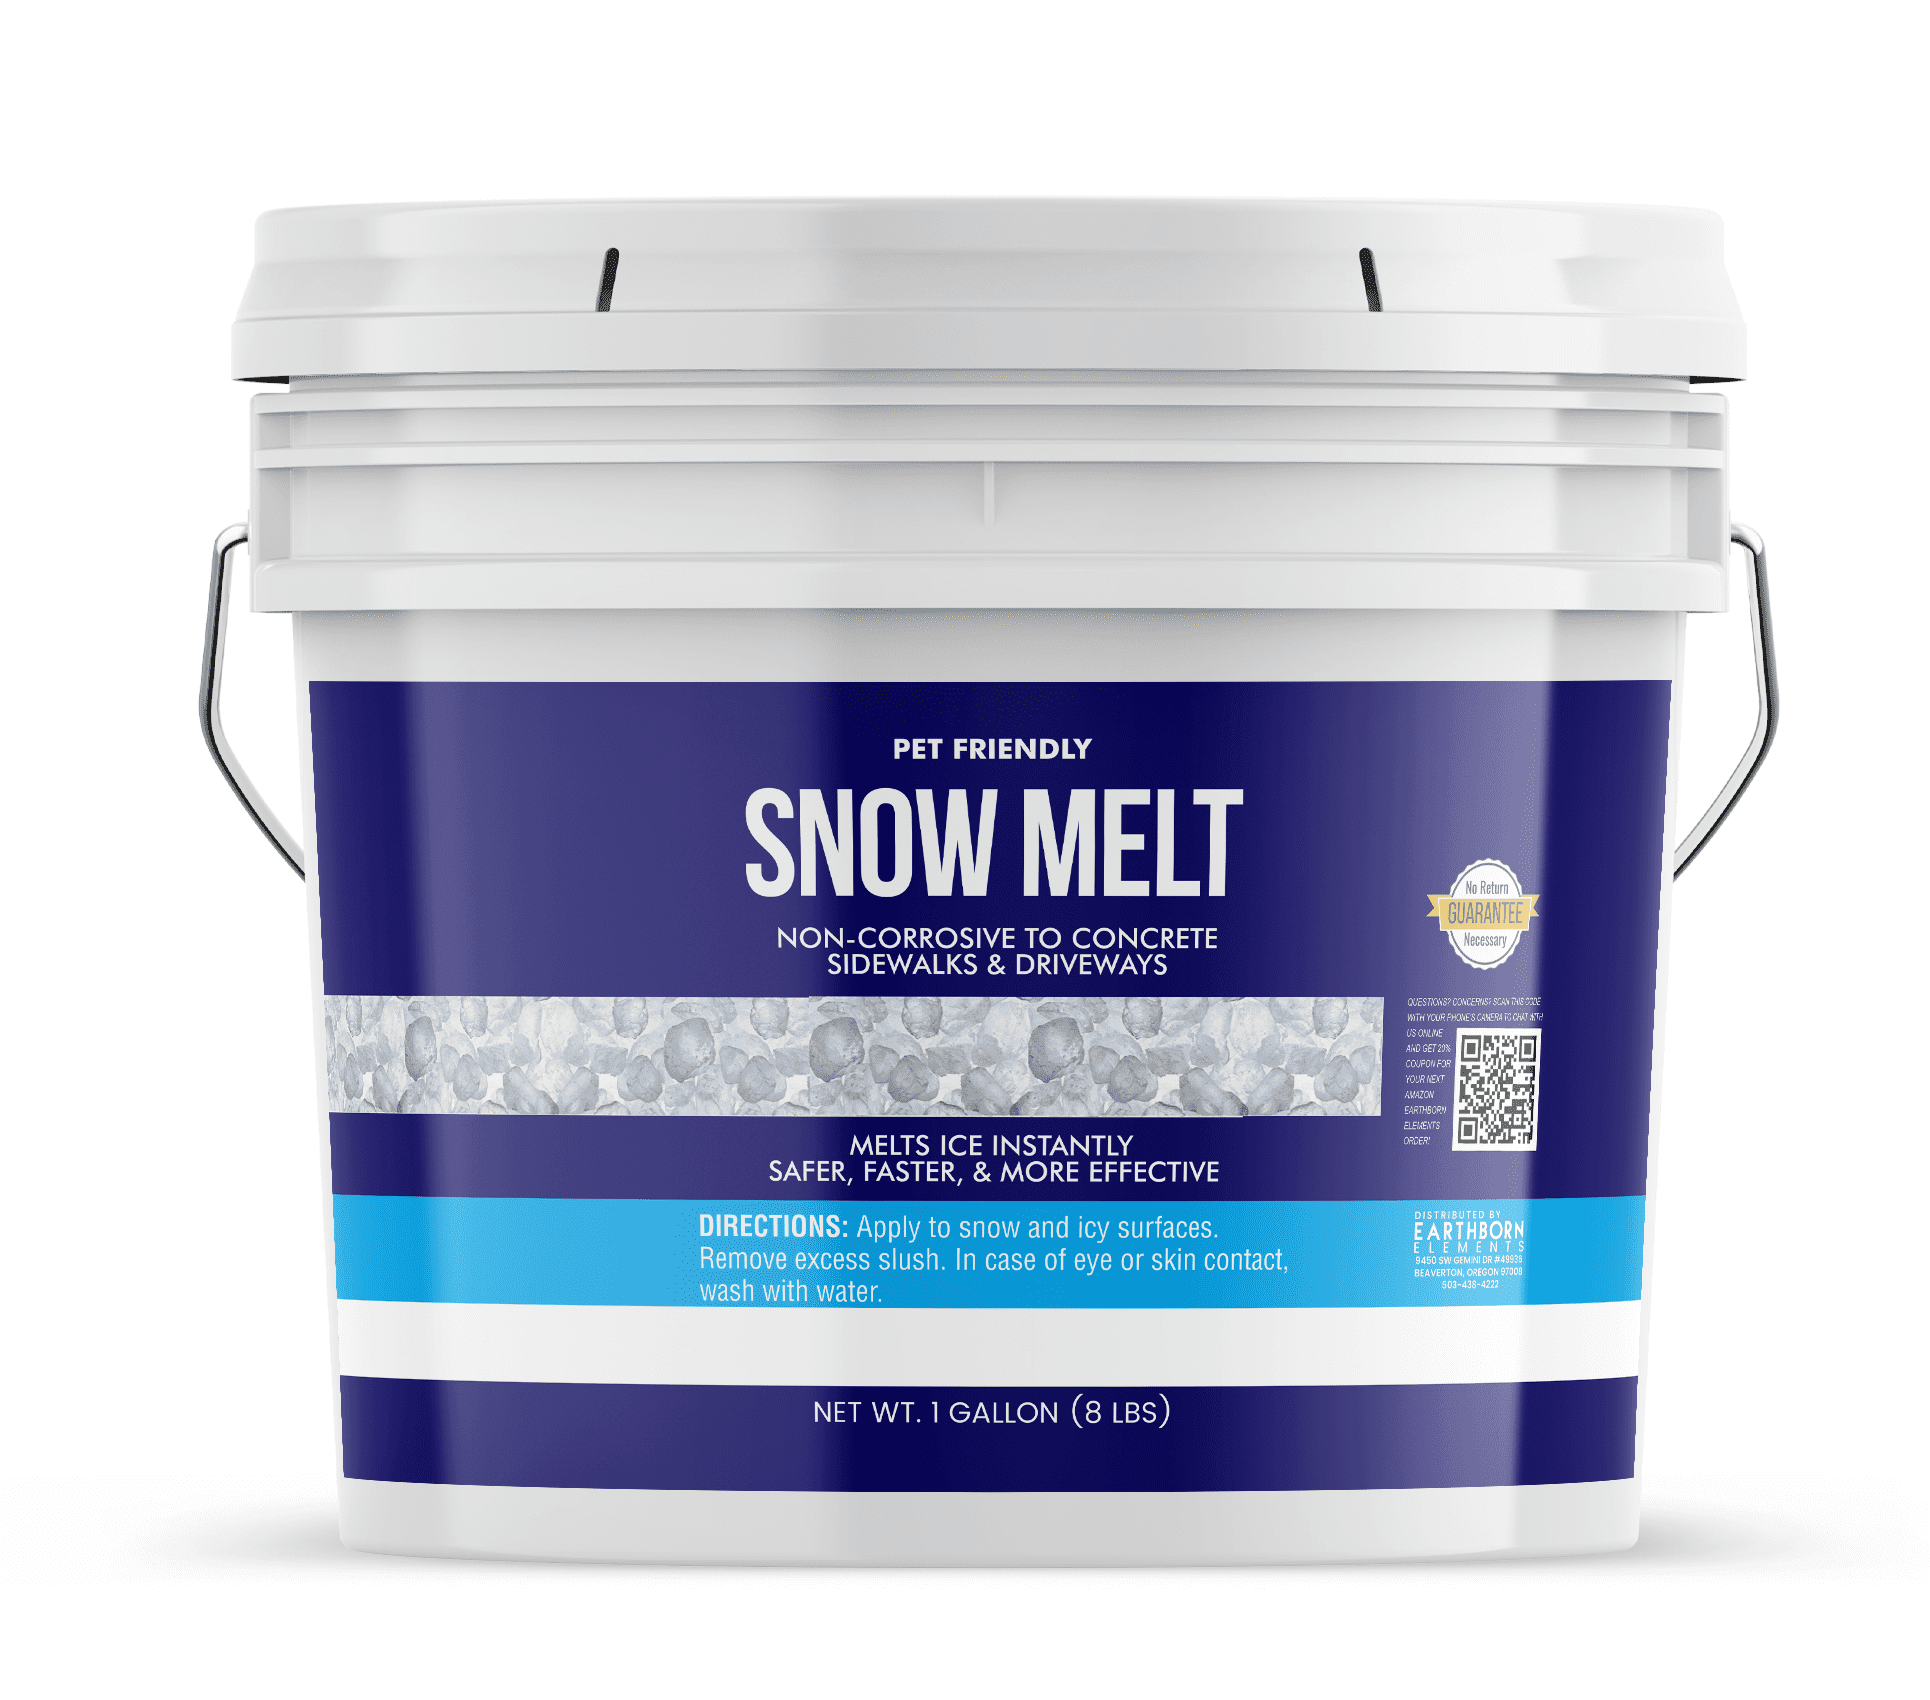 Warmzies™ Snow Deicer 60ml - Fast Ice Melting Spray for Car Windows